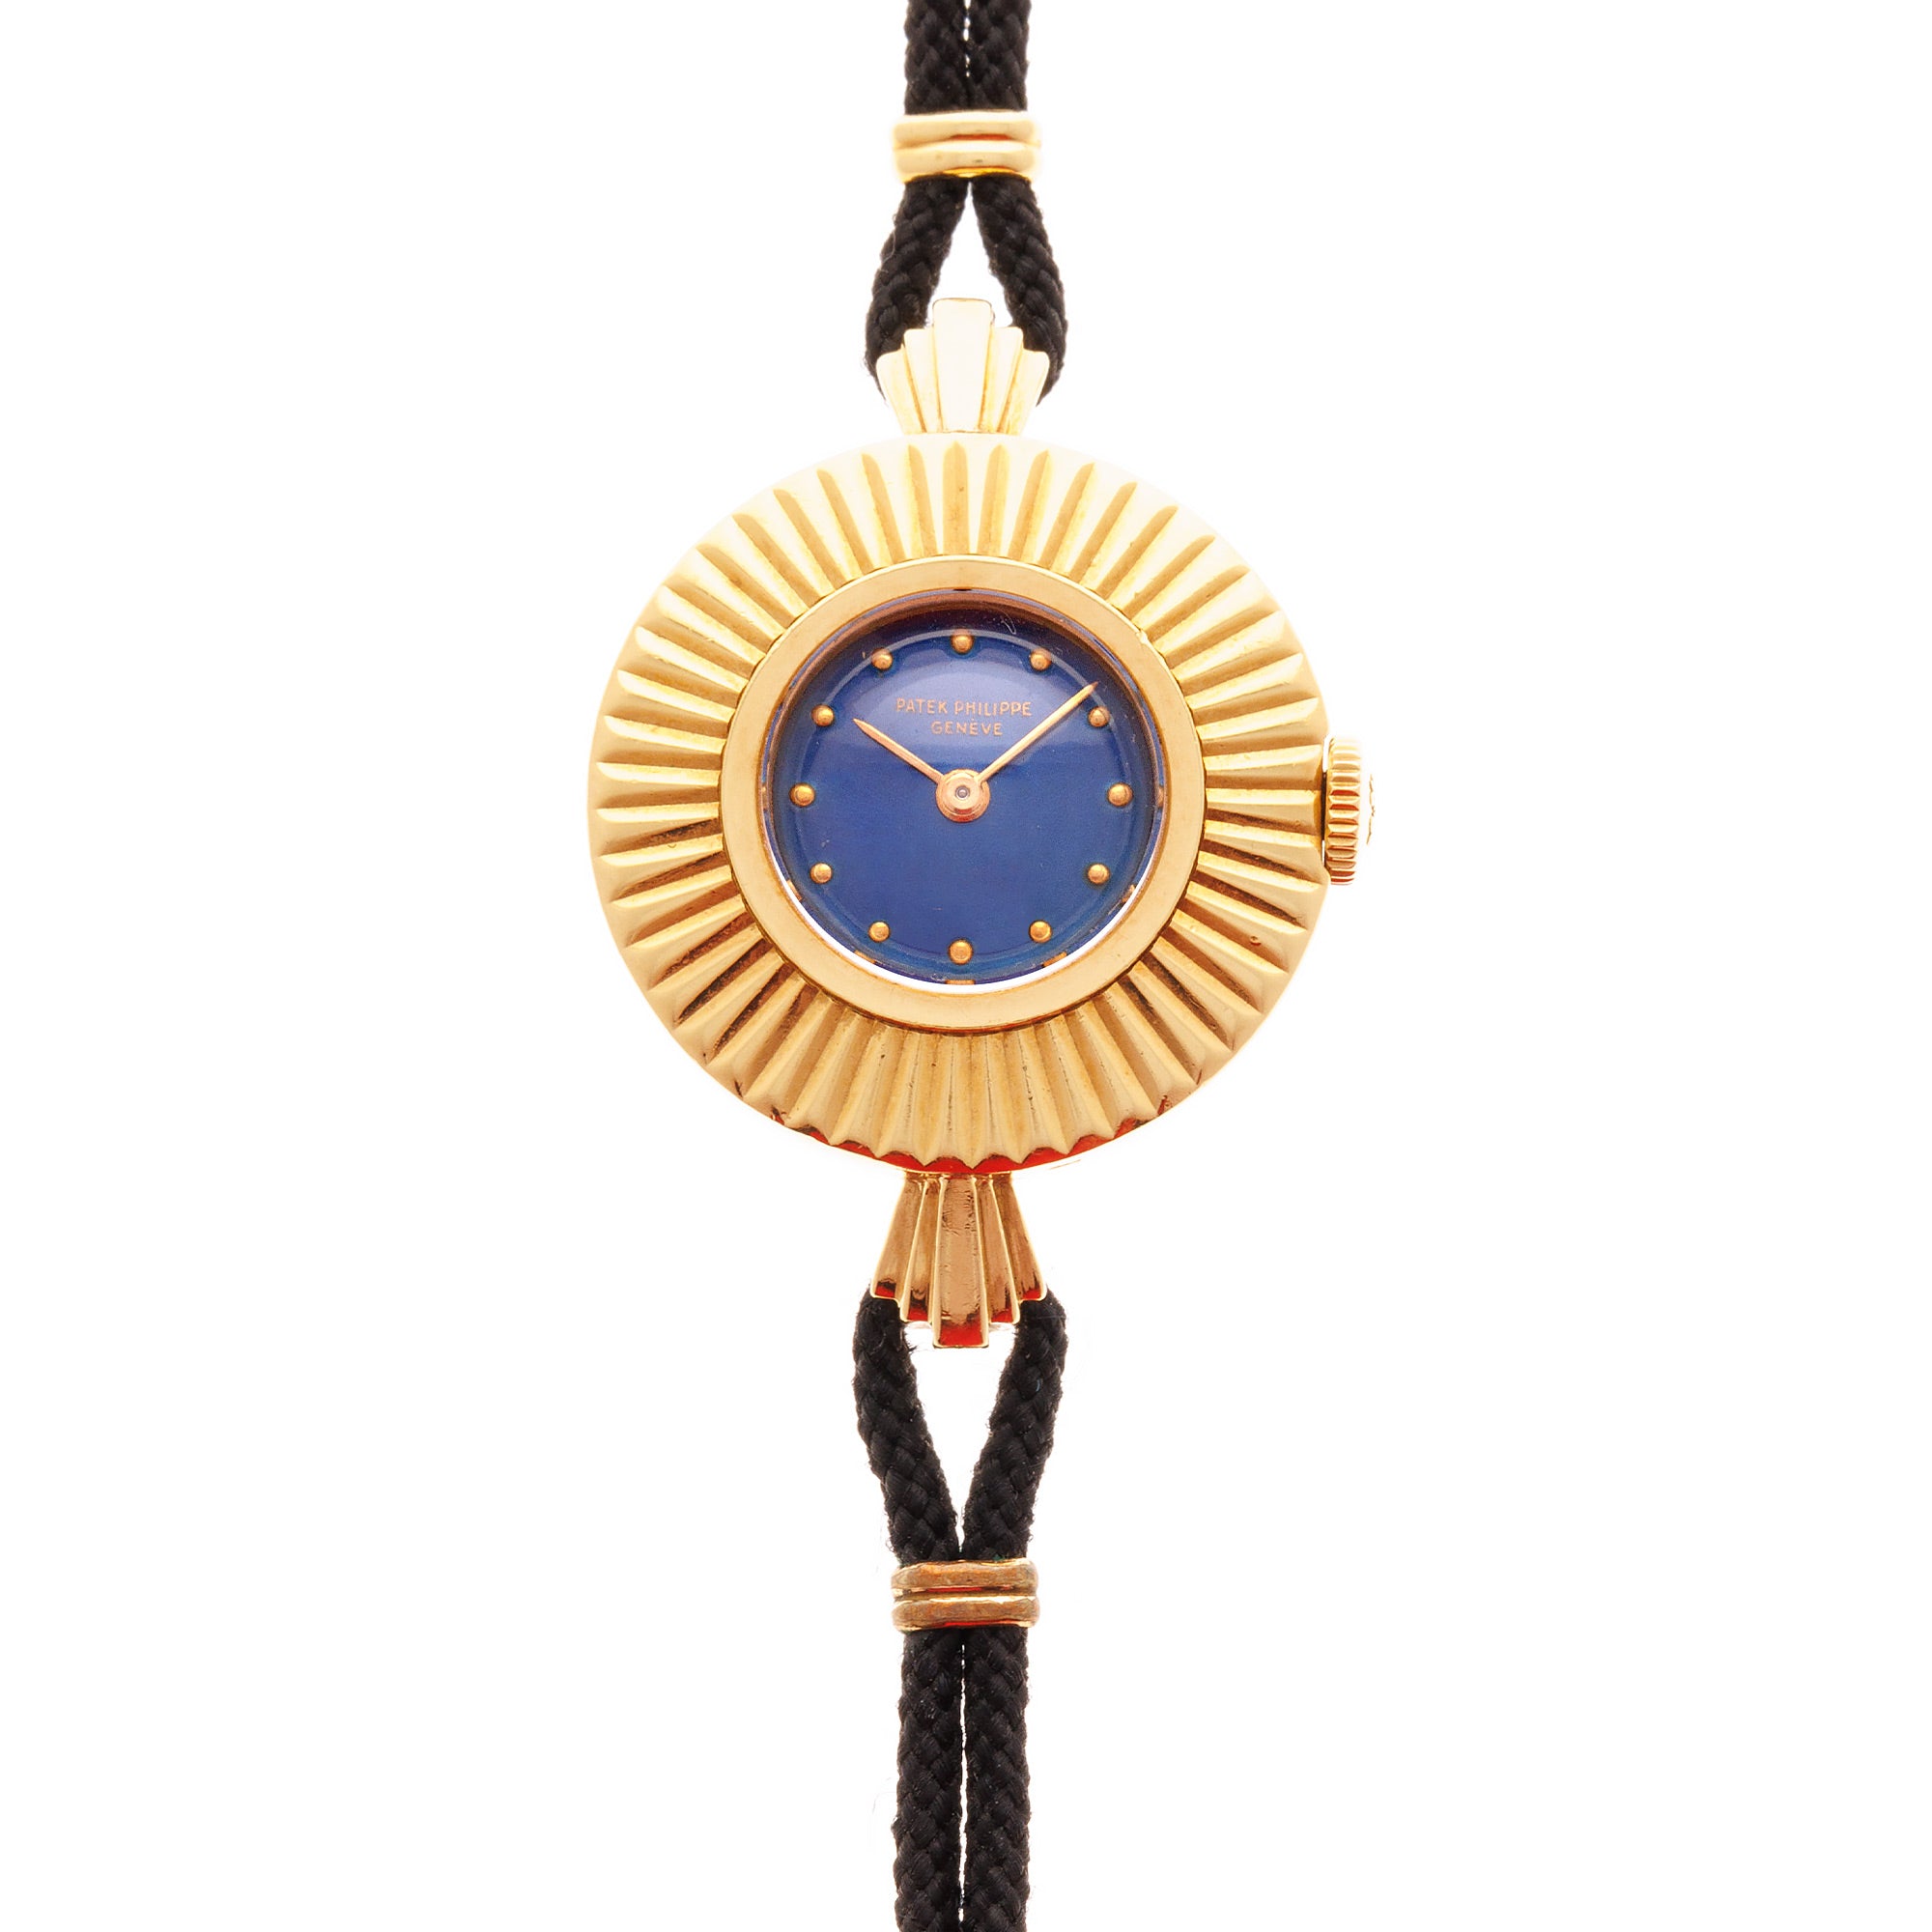 Patek Philippe - Patek Philippe Yellow Gold Blue Enamel Cocktail Watch Ref. 3247 - The Keystone Watches